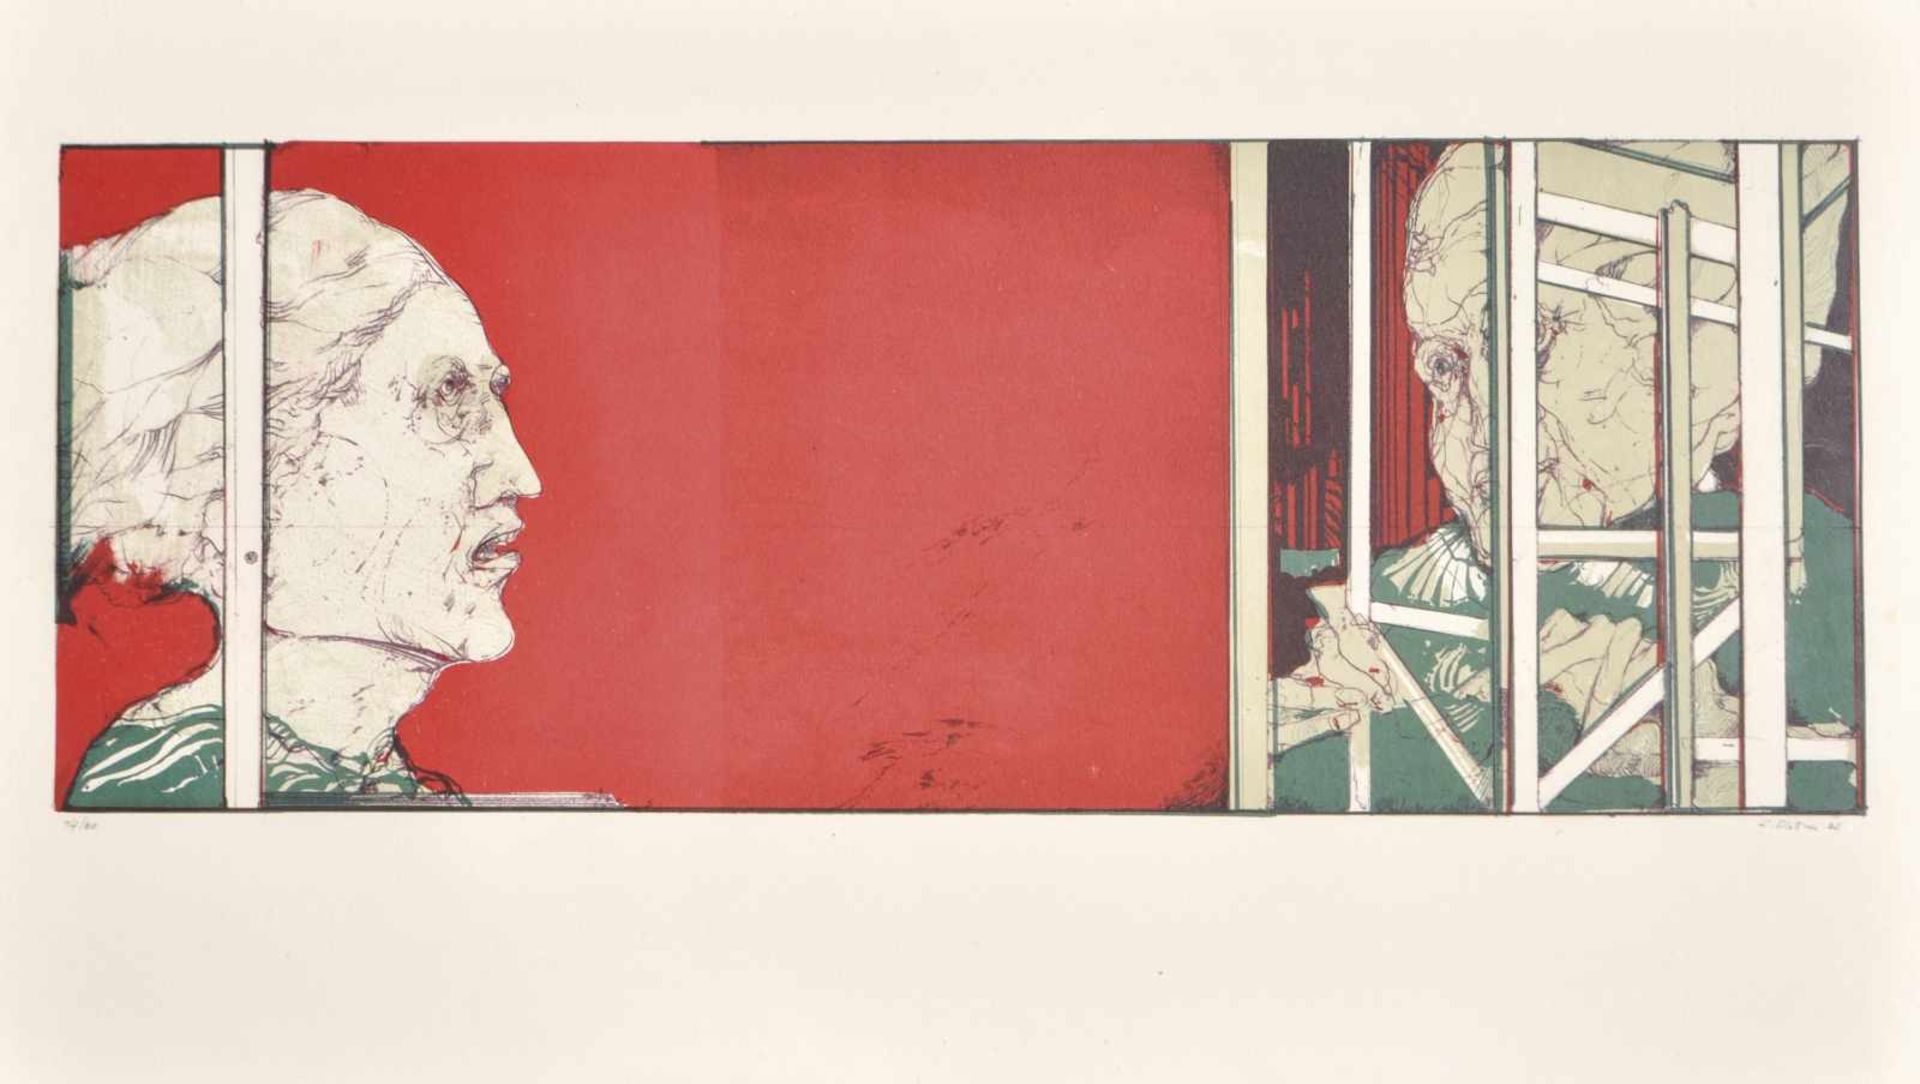 Karl Plattner (Mals/Malles 1919  Mailand/Milano 1986)Der Käfig, 1968;Lithografie, 40 x 78,5 cm (